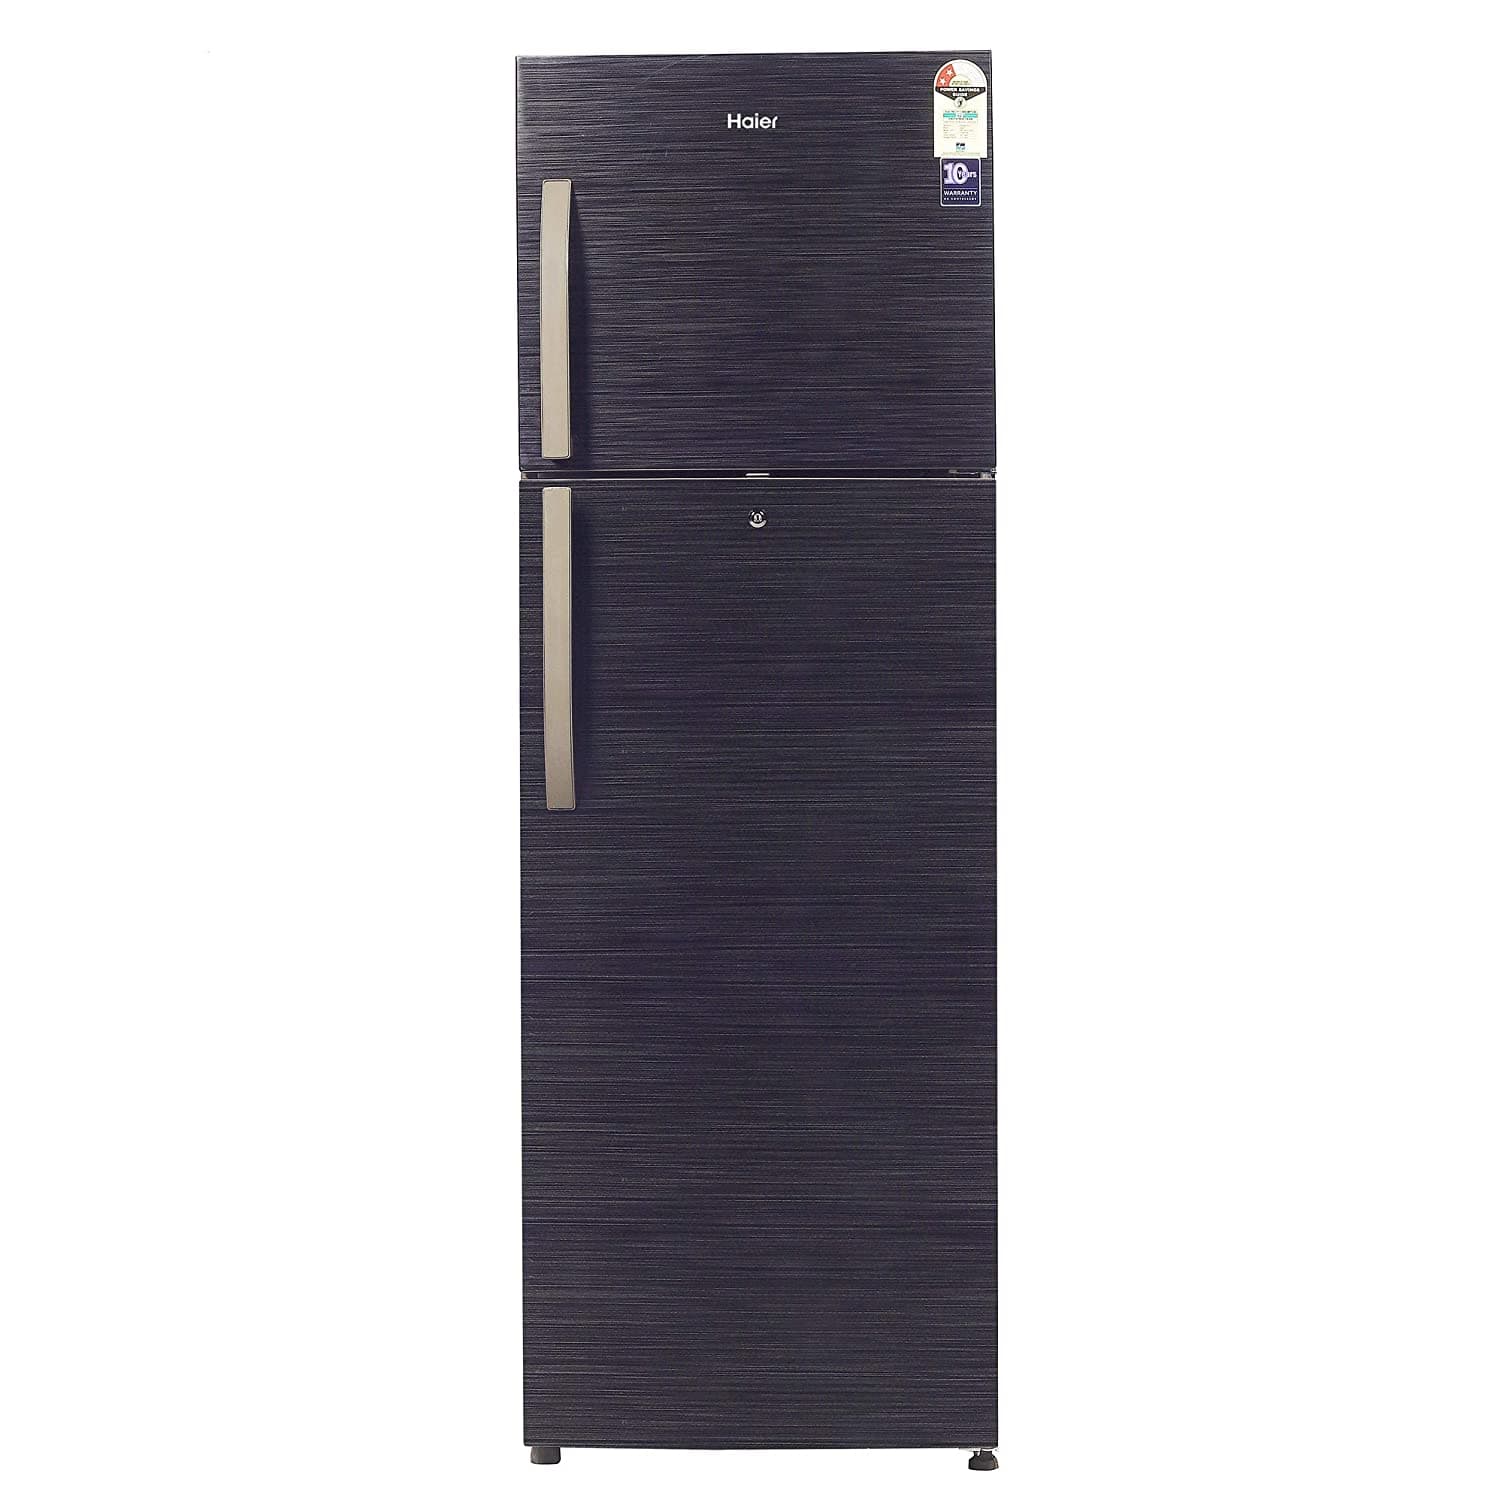 Haier HRF-3674BKS-E 34 Ltr Double Door Refrigerator